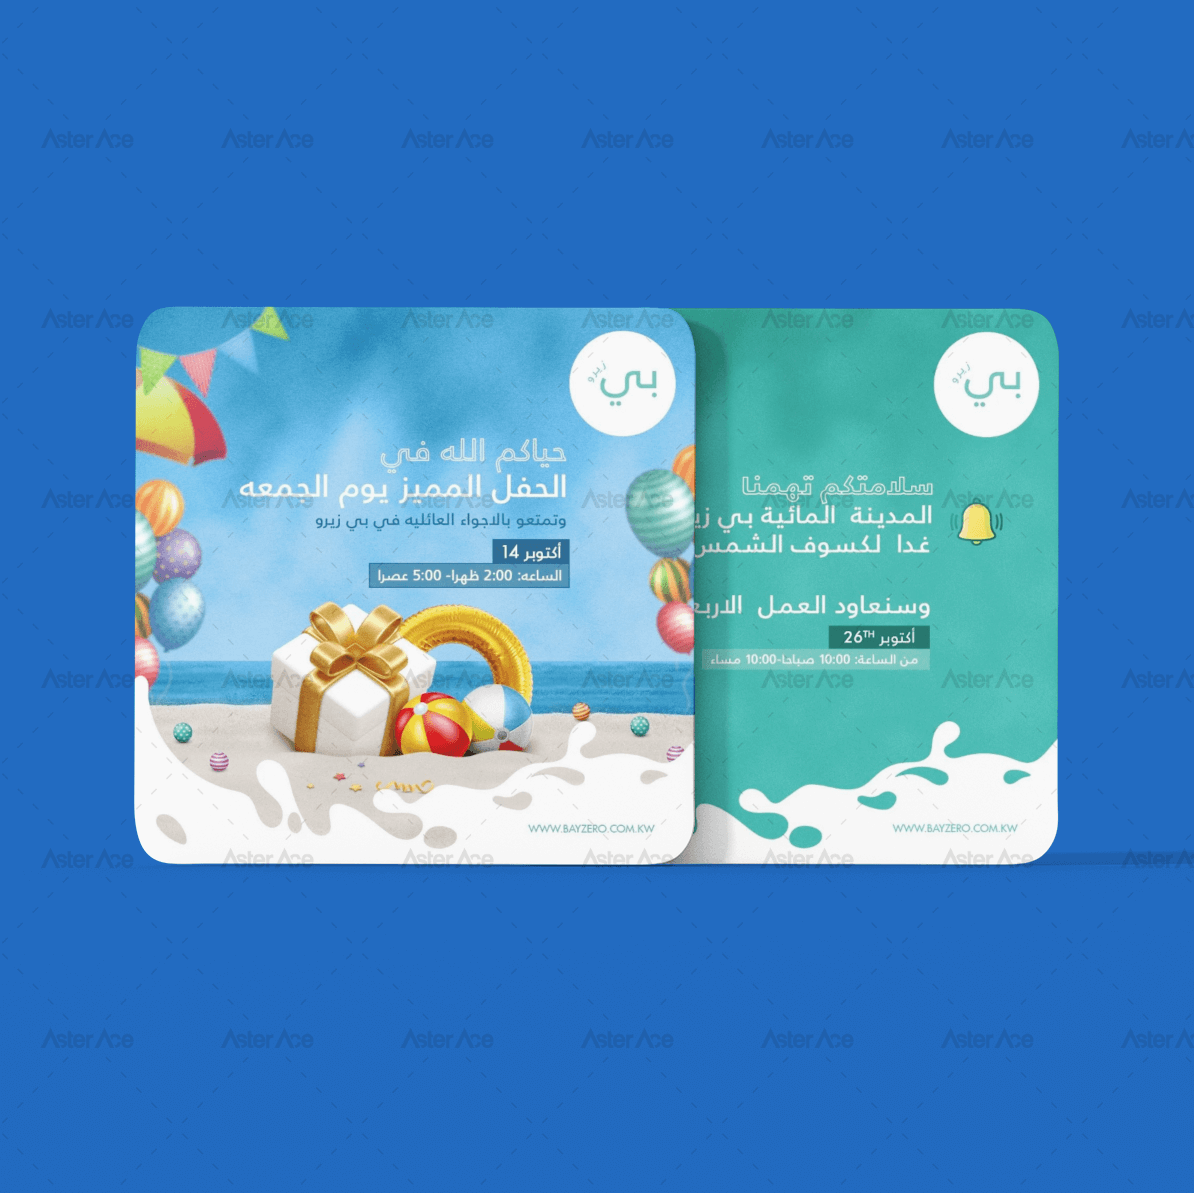 Bay Zero Kuwait (Lifestyle Park) Online Promotion